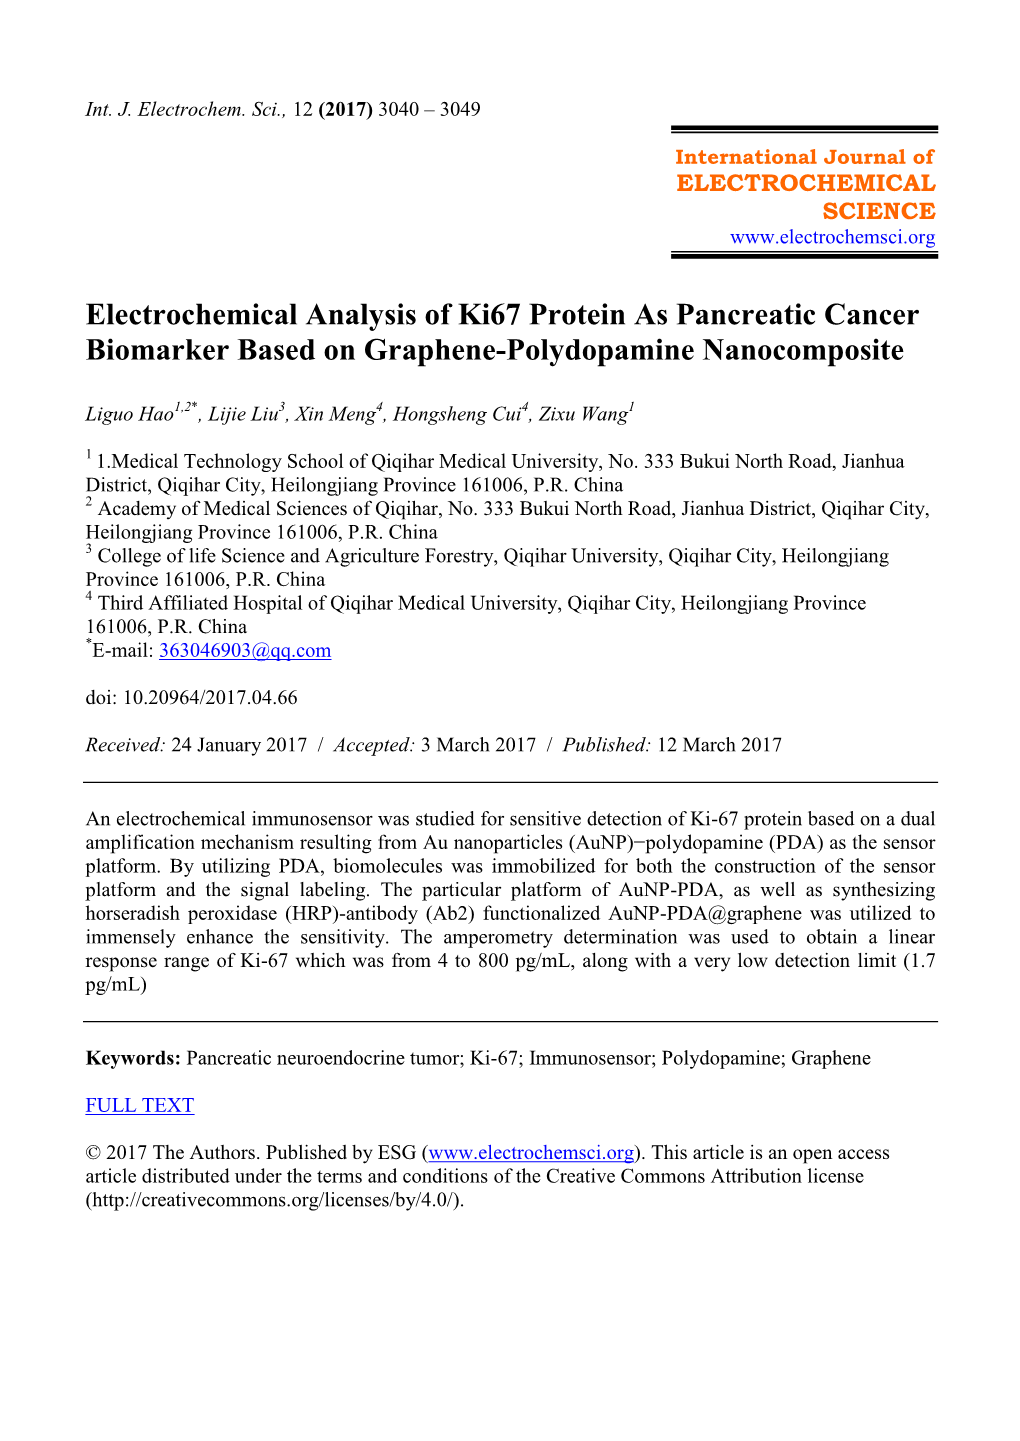 Electrochemical Analysis of Ki67 Protein As Pancreatic Cancer Biomarker Based on Graphene-Polydopamine Nanocomposite